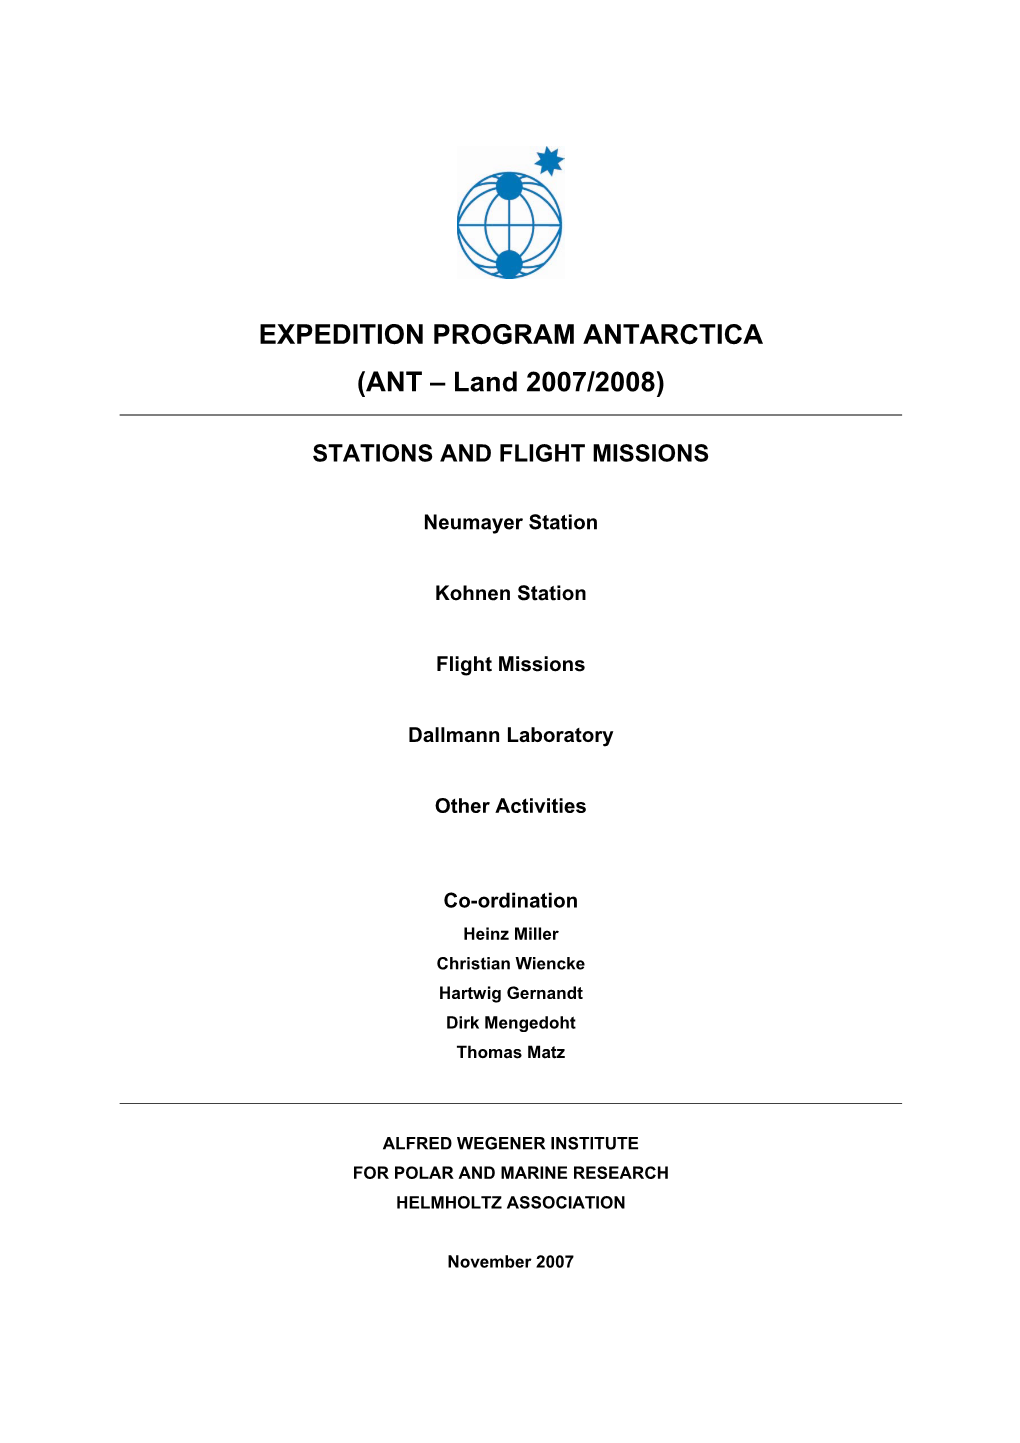 EXPEDITION PROGRAM ANTARCTICA (ANT – Land 2007/2008)